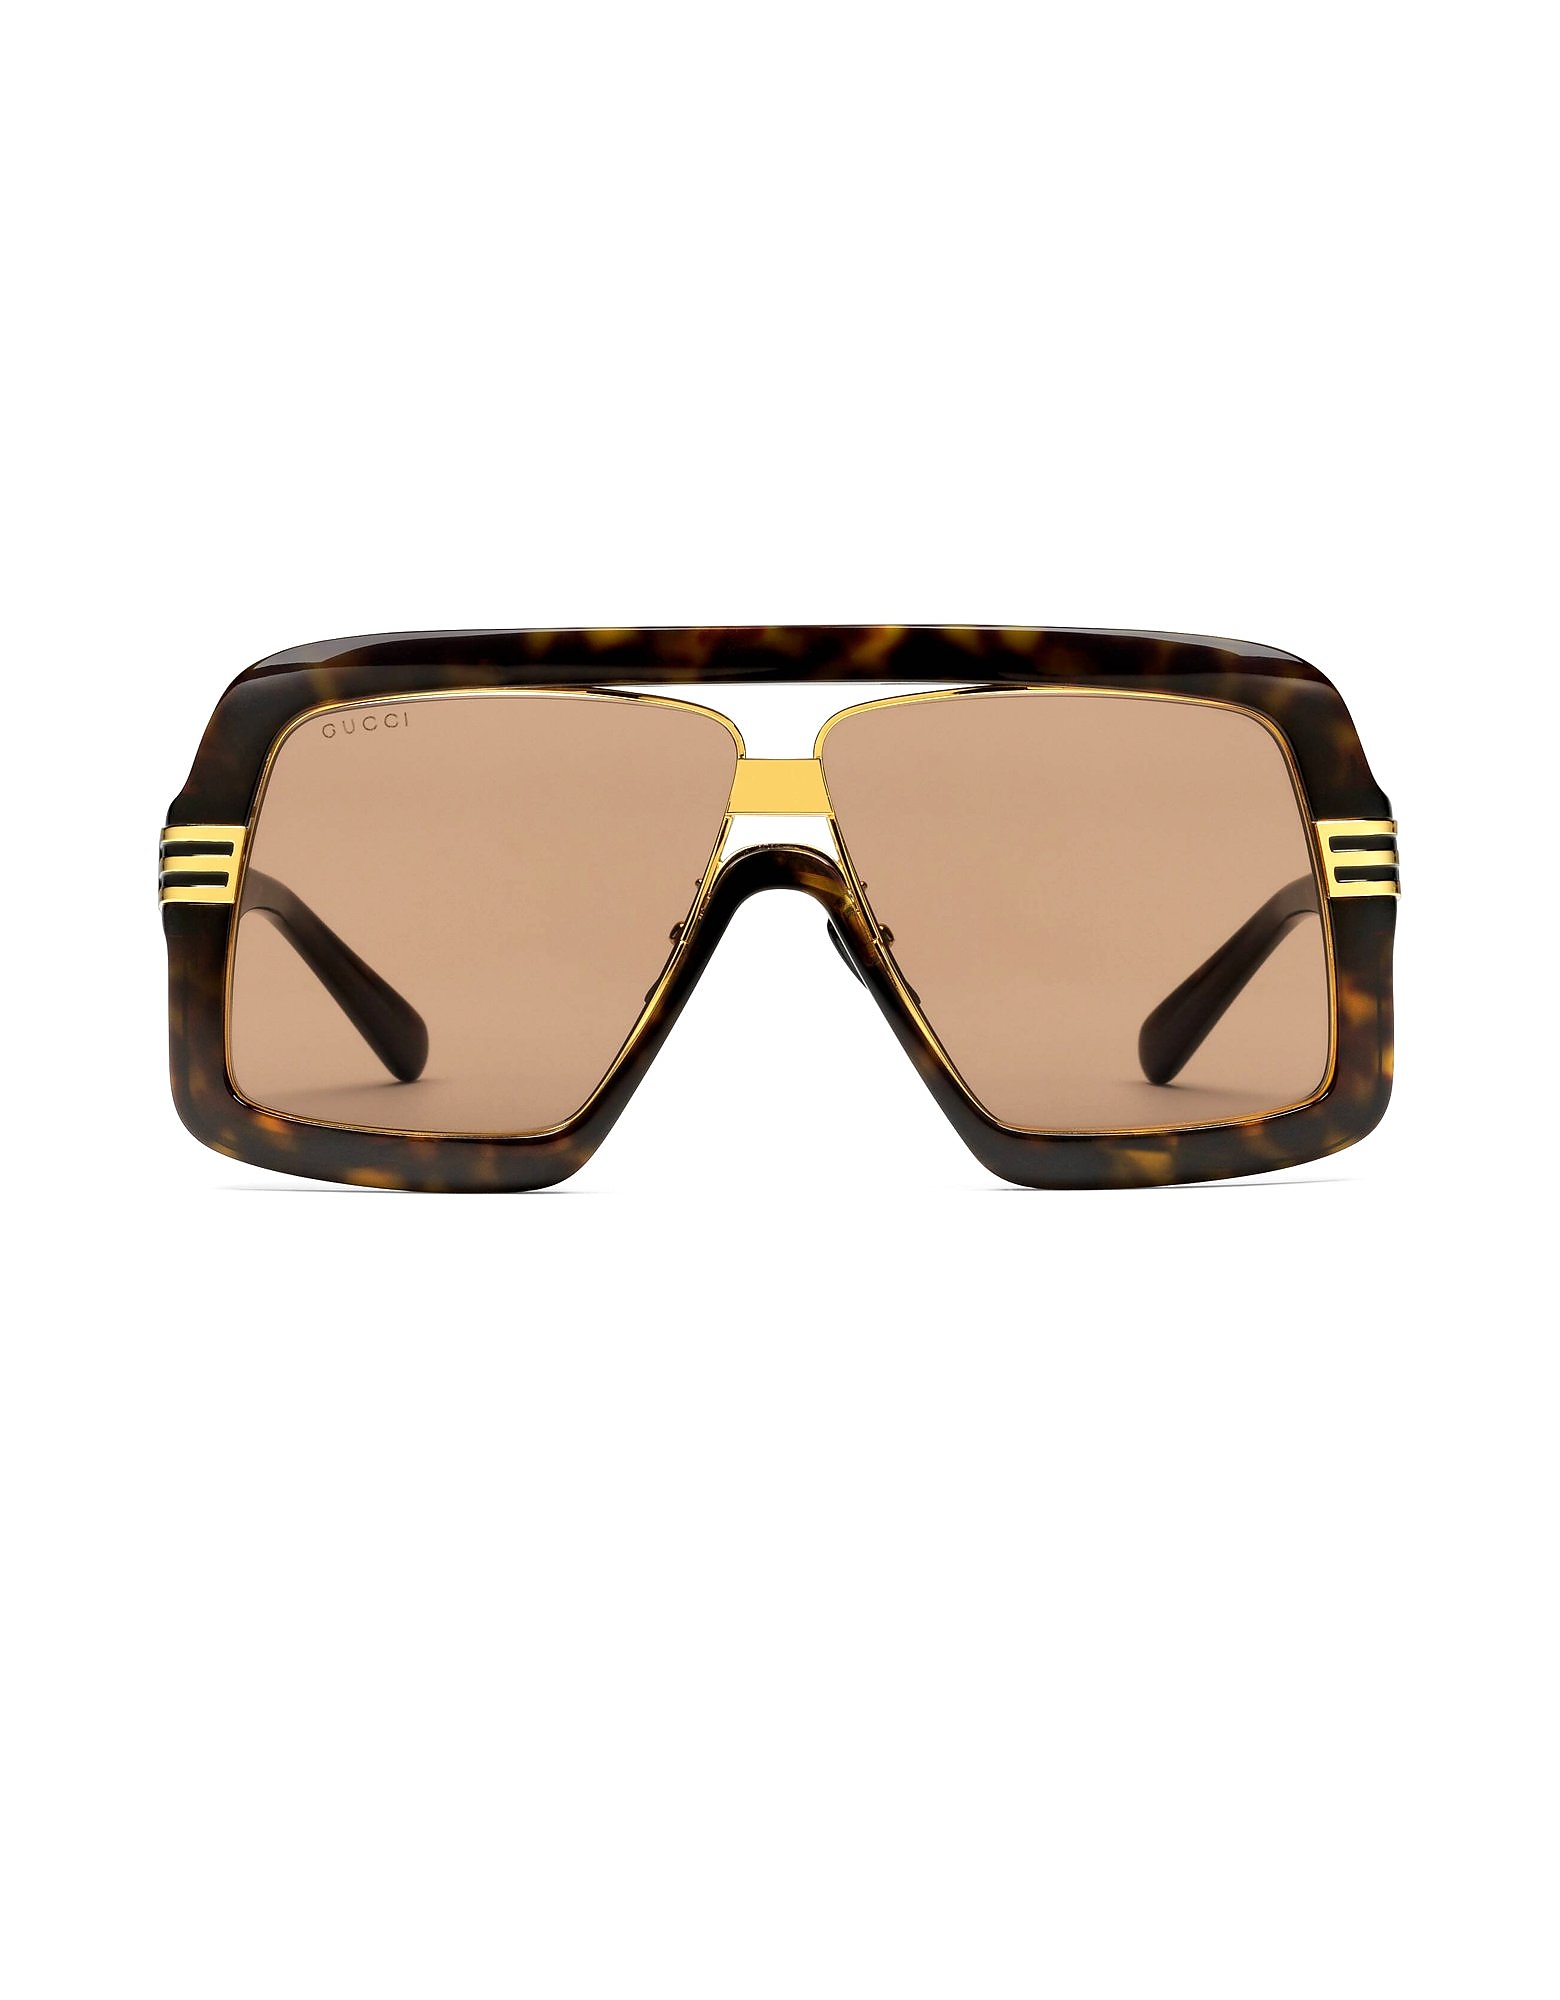 Gucci Sunglasses Dark Tortoiseshell Oversized Frame Men's Sunglasses